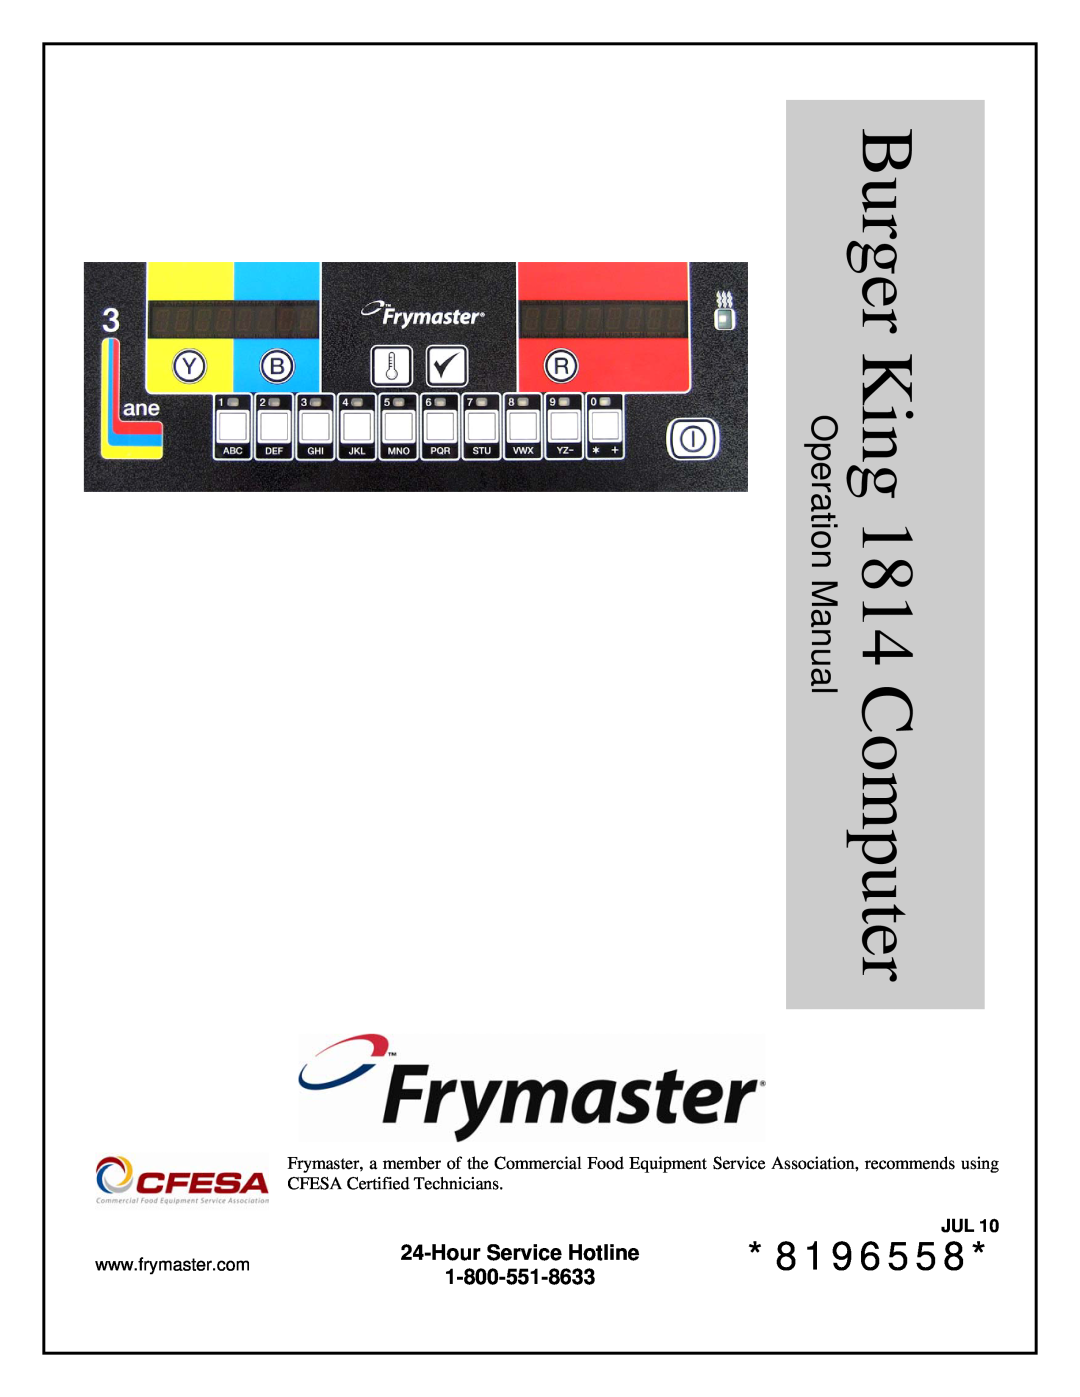 Frymaster operation manual 8196558, Burger King 1814 Computer, HourService Hotline 